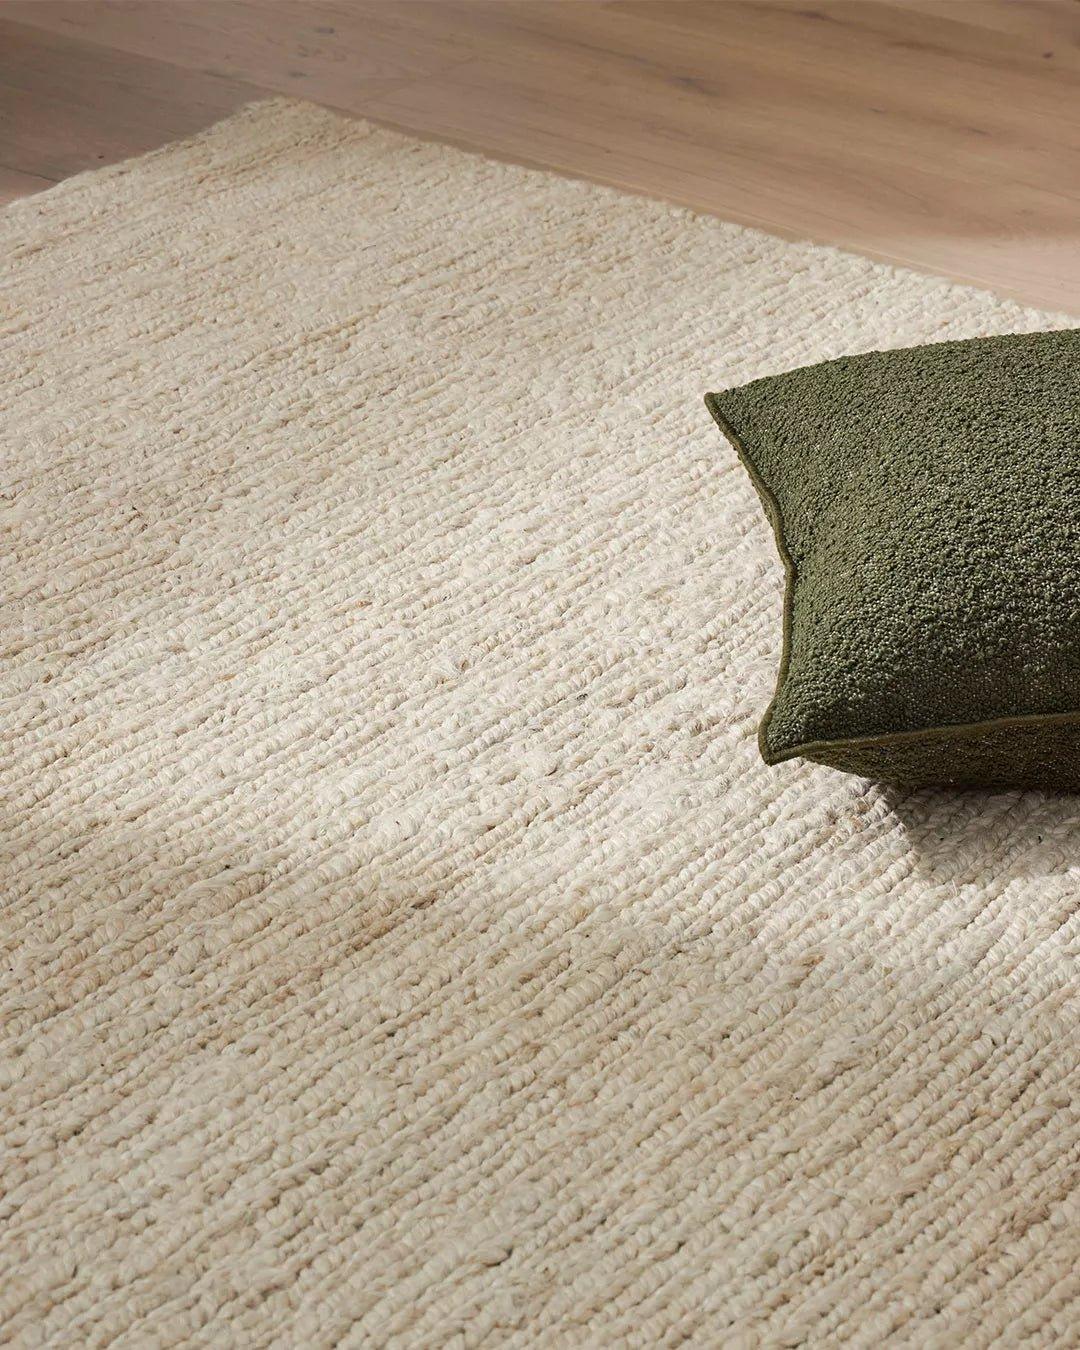 Weave Suffolk Floor Rug - Pearl - 2m x 3m - RugRSK03PEAR 2